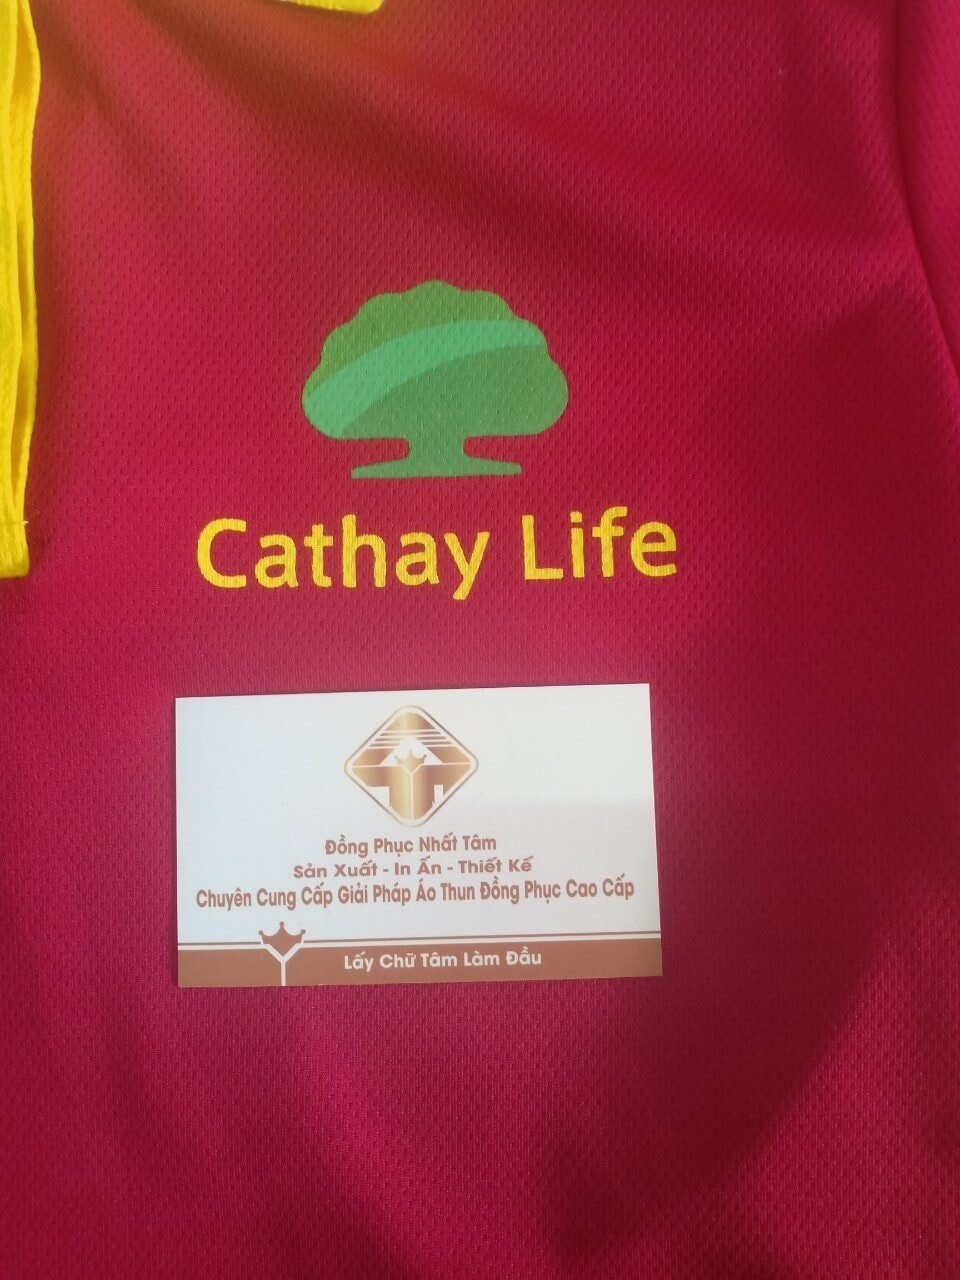 Cathay Life3